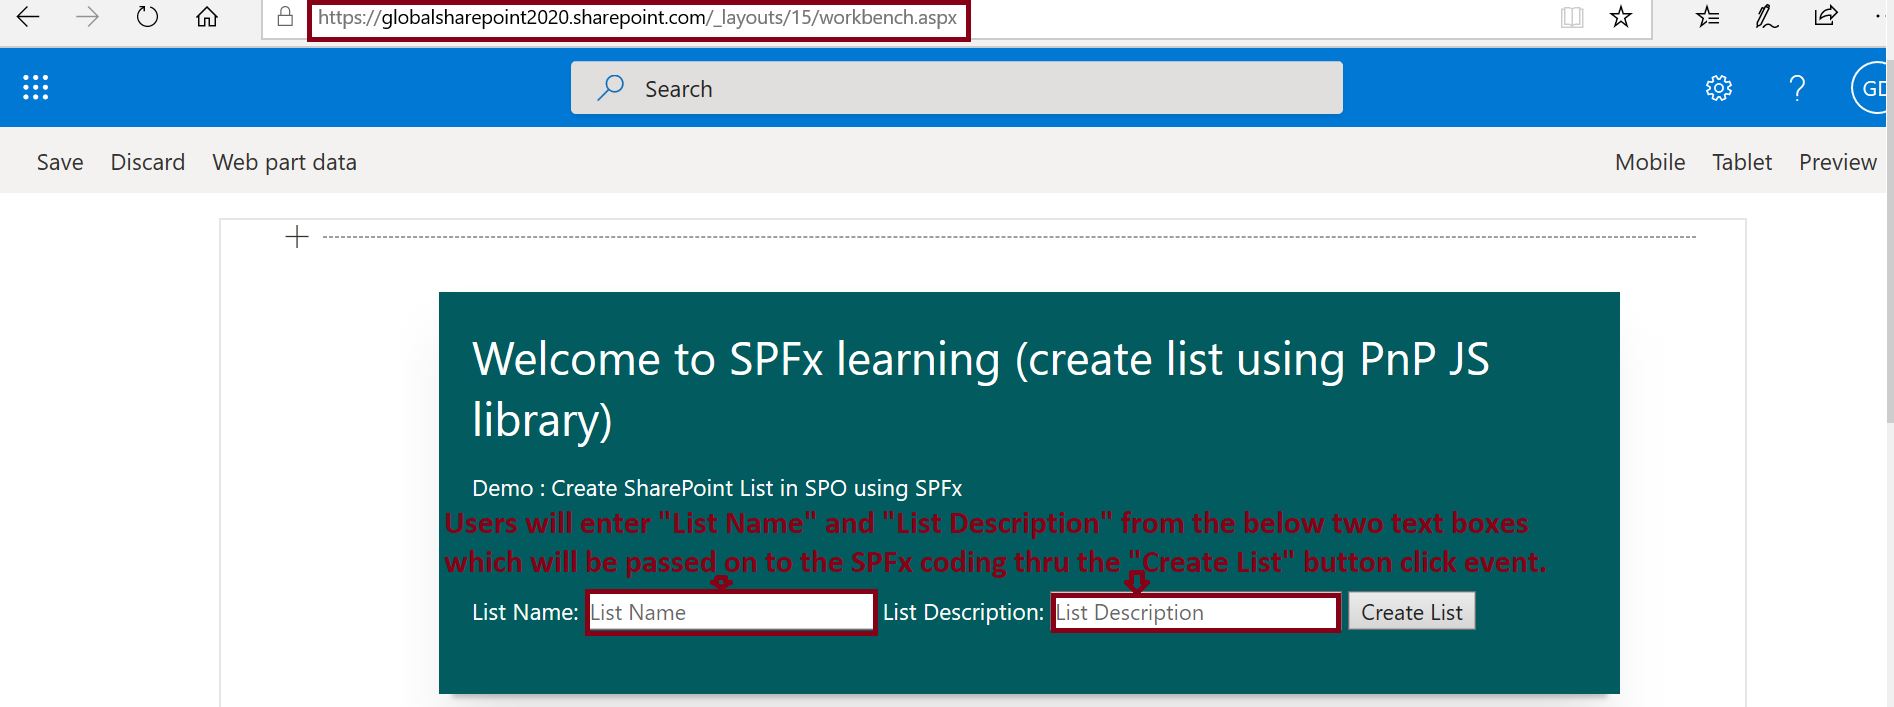 Pass textbox entry in SPFx framework as a parameter - demo